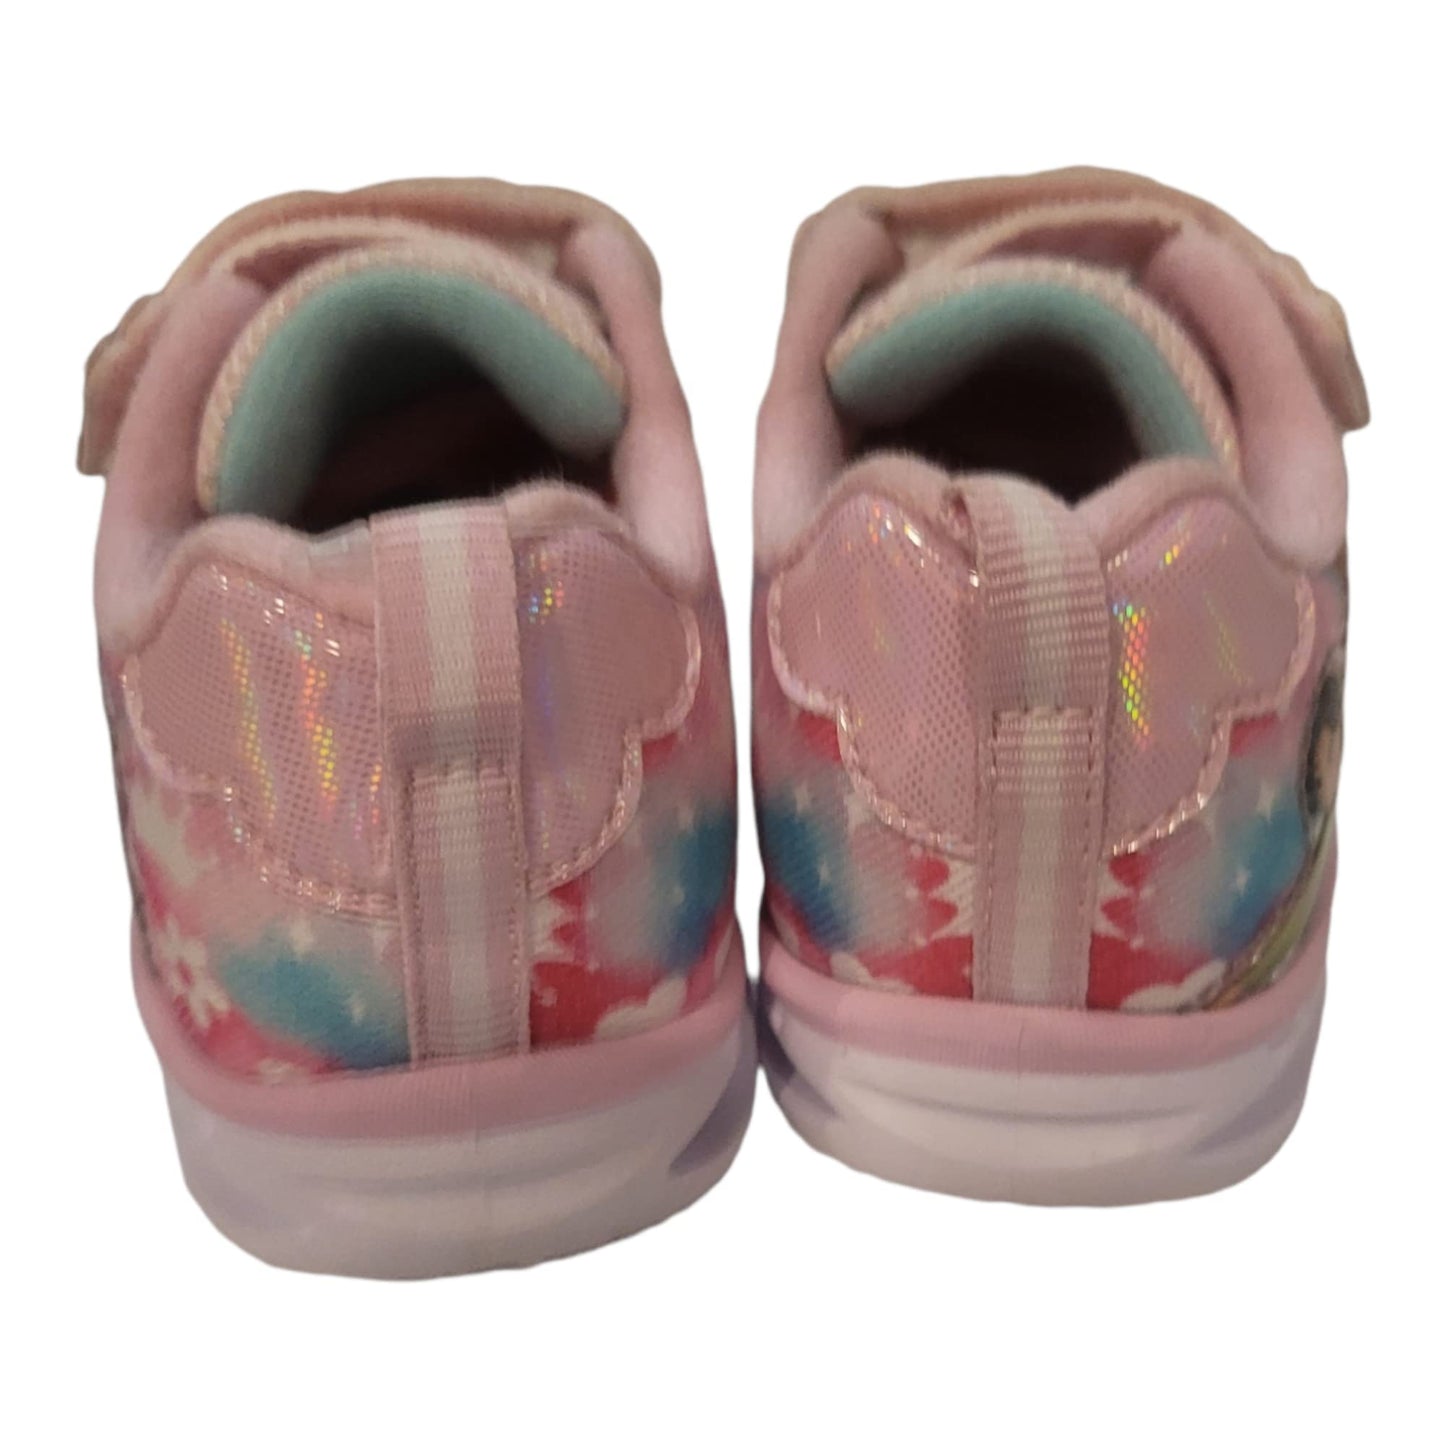 Disney Princesses Lighted Athletic Sneaker, Pink (Toddler), Size 9